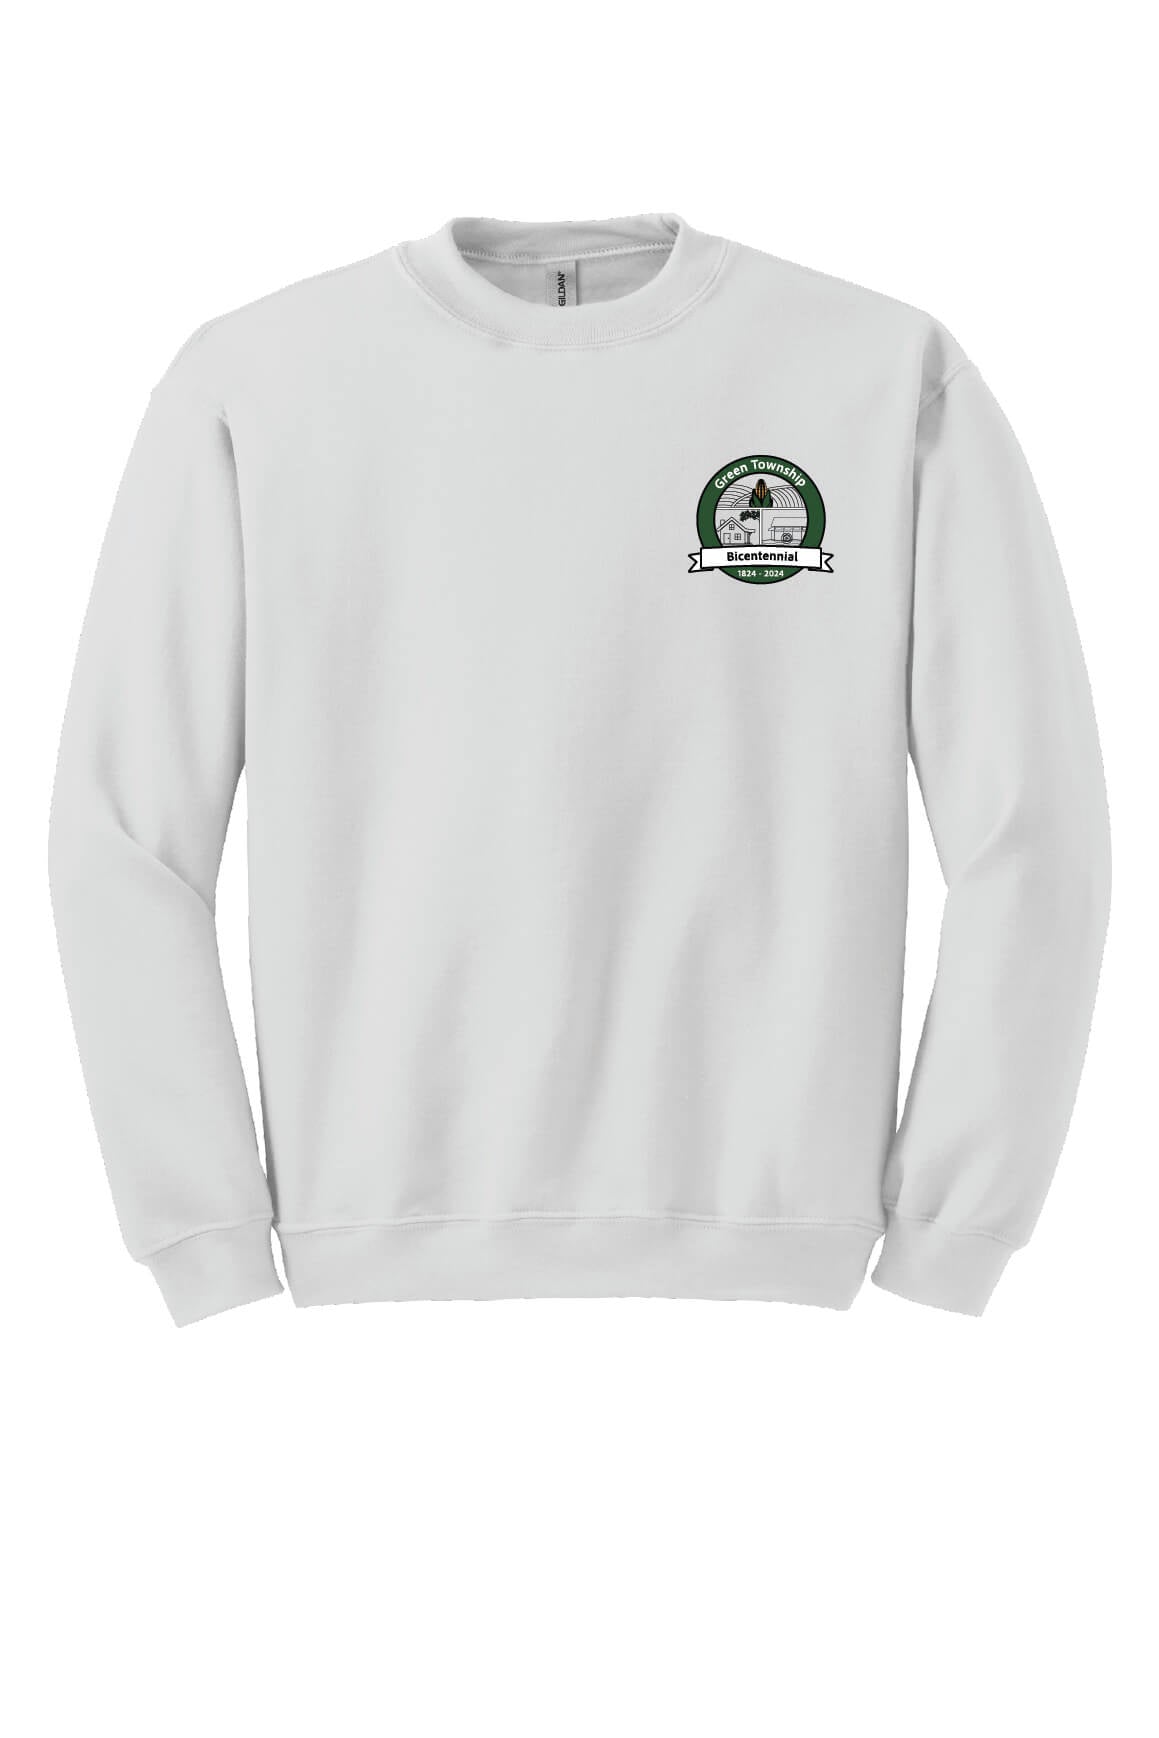 Crewneck Sweatshirt (Youth) white